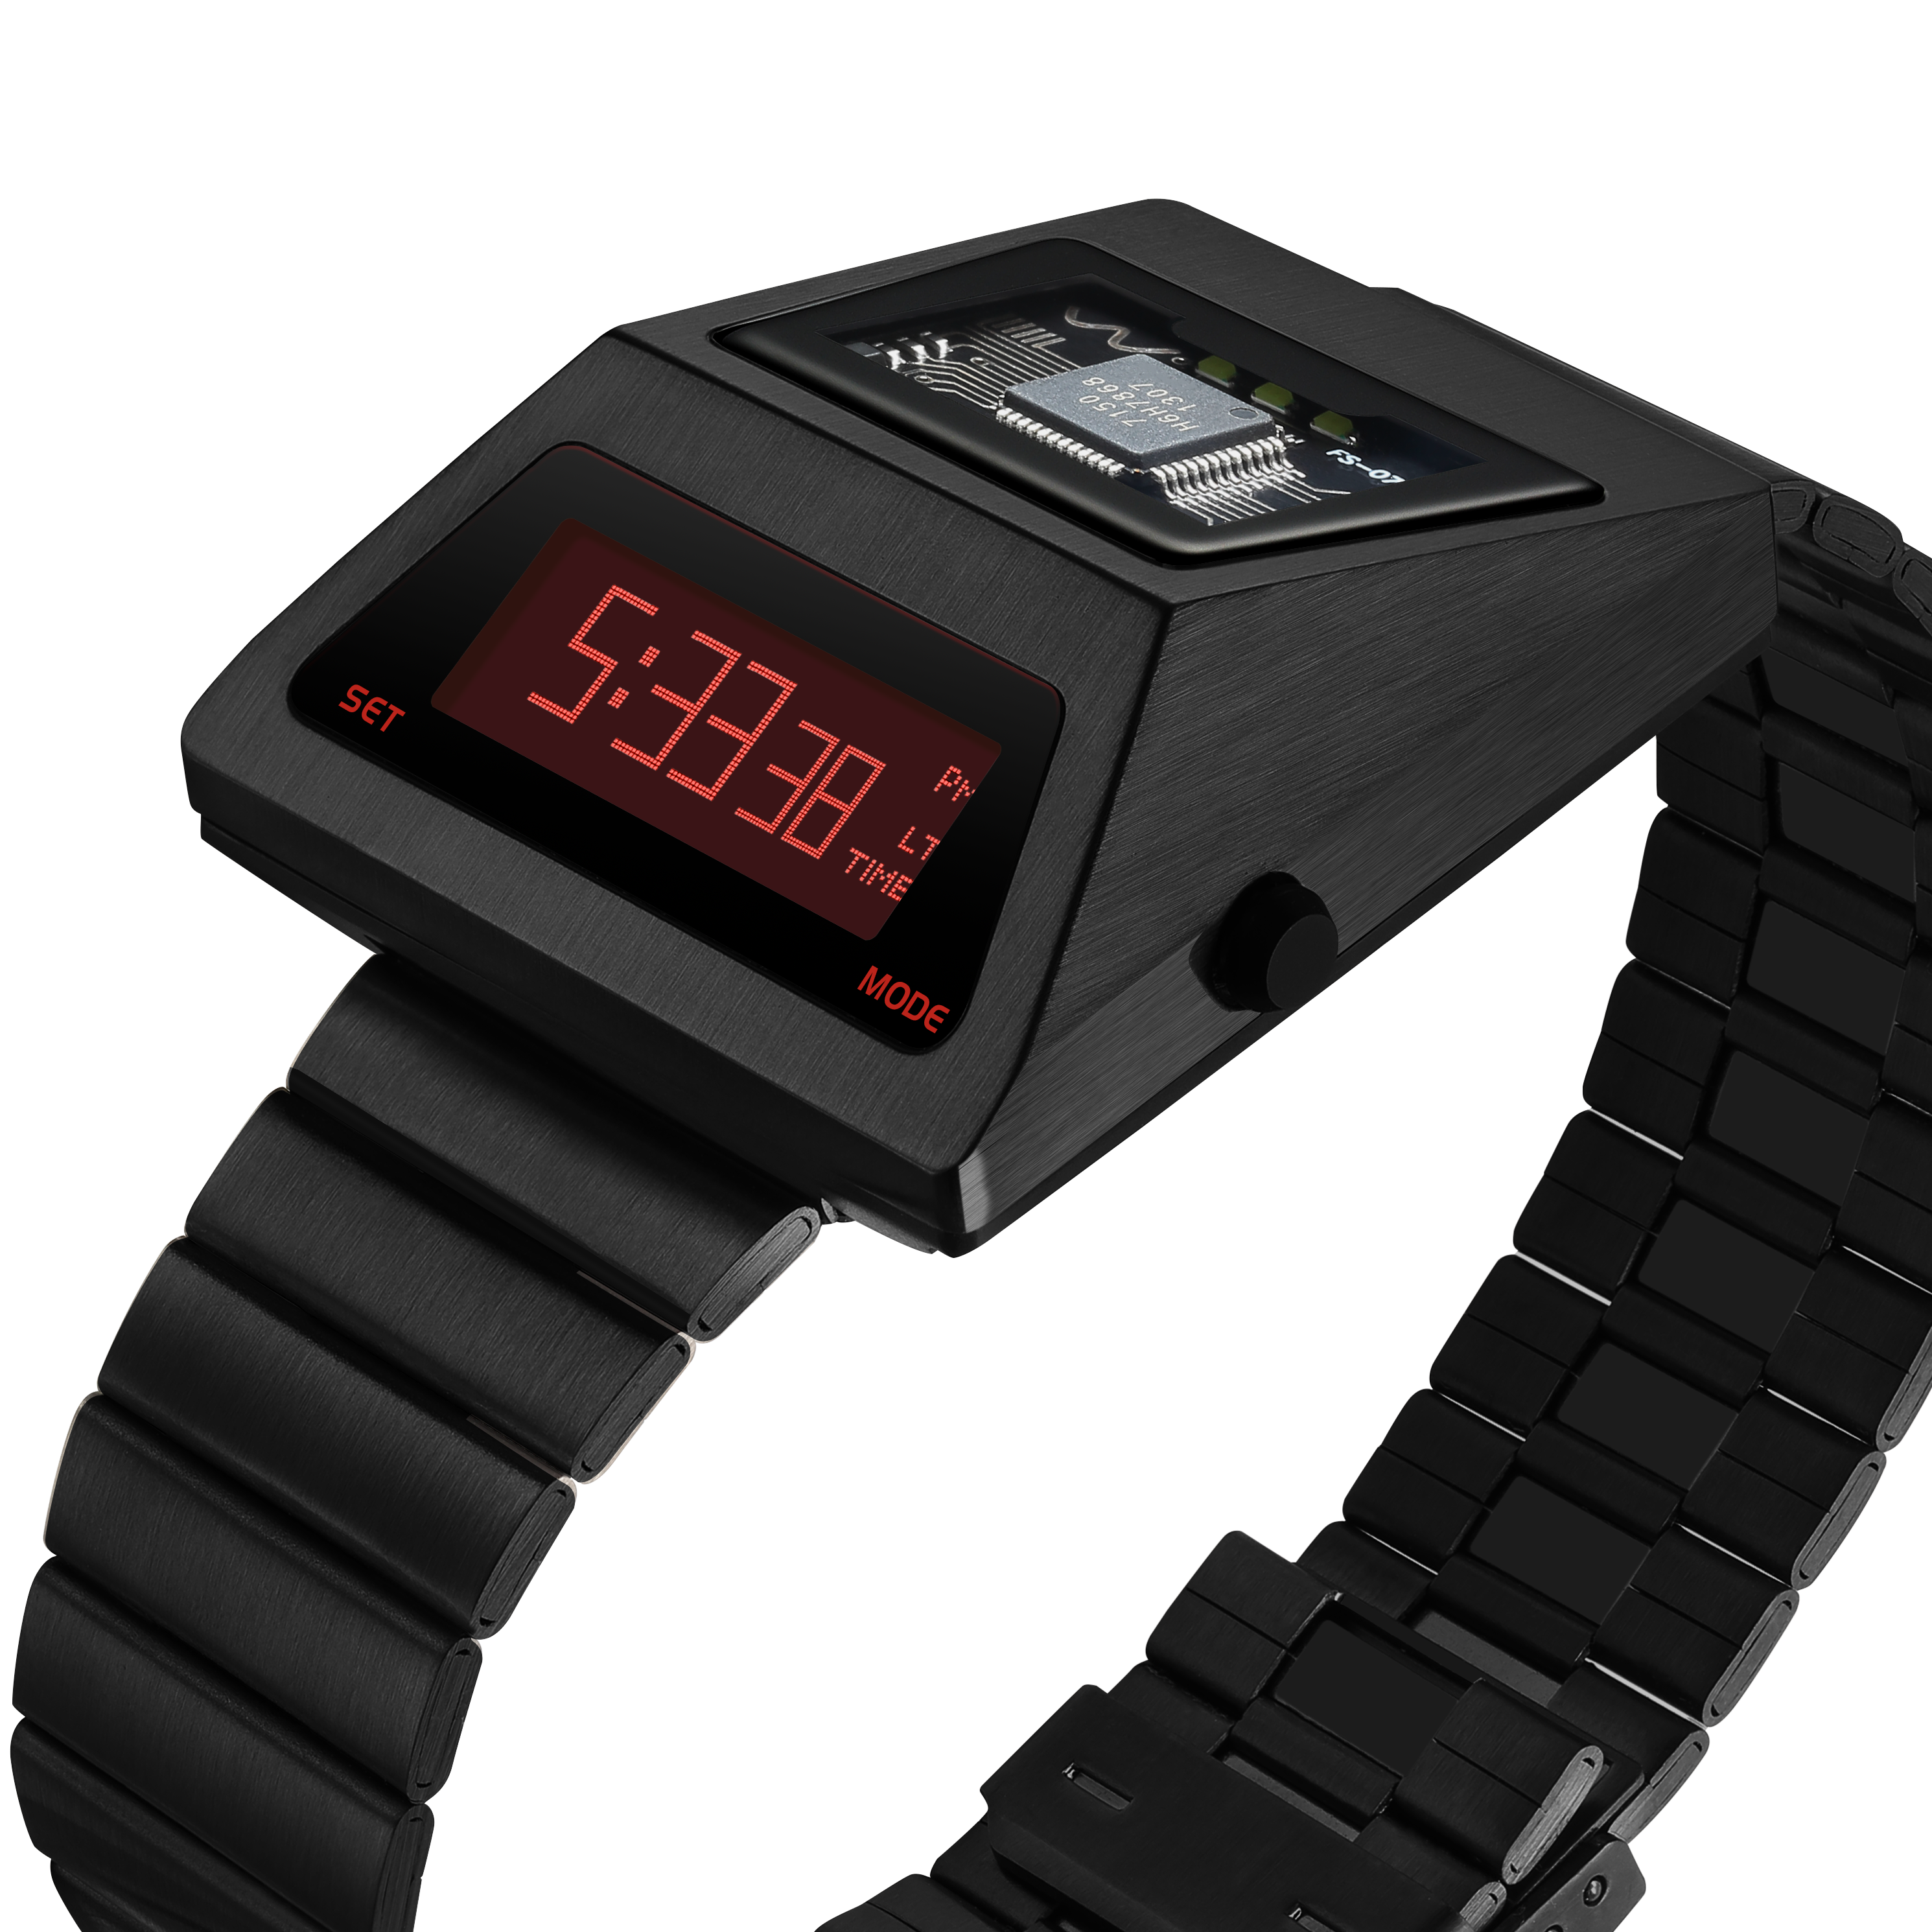 benlydesign-cyber-watch-s3000black-R-side view